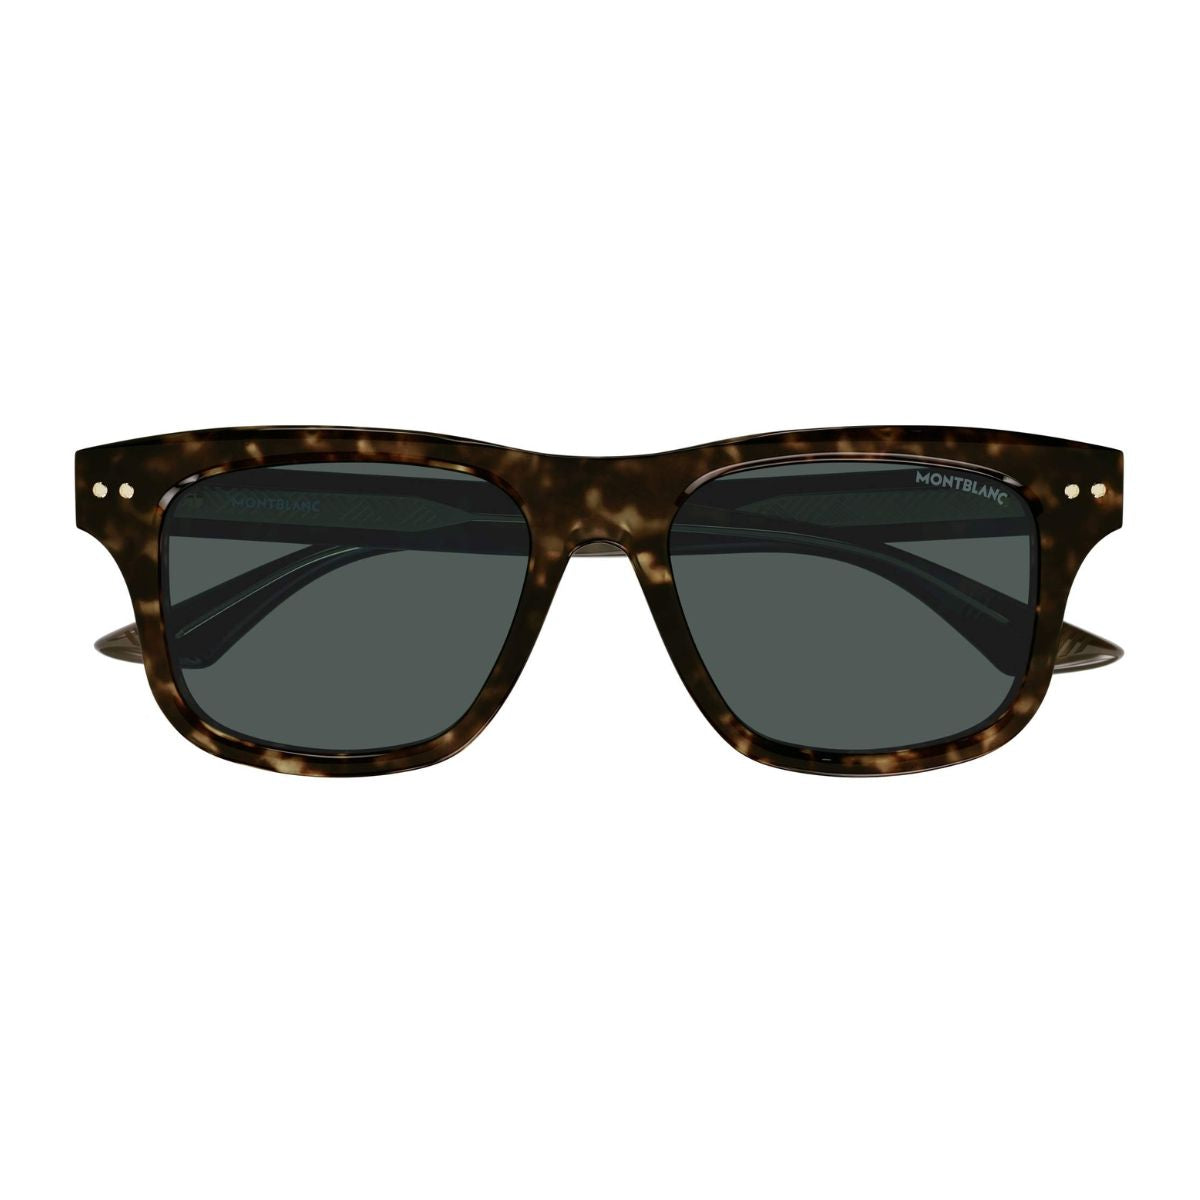 "Shop Trending Havana Square Sunglasses From Mont Blanc Eyewear At Optorium"